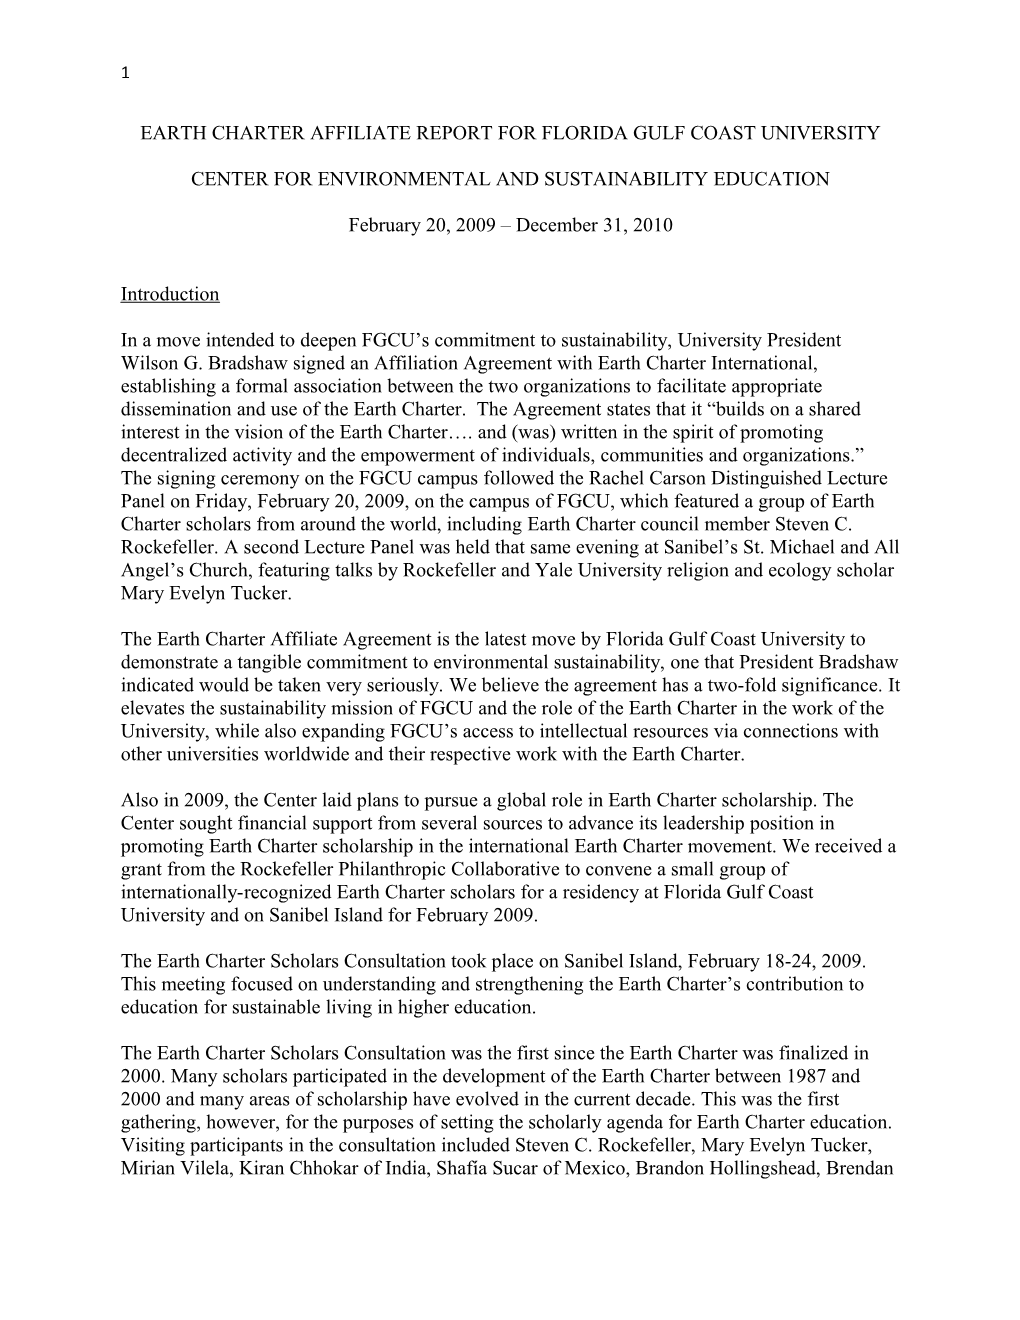 Earth Charter Affiliate Report for Florida Gulf Coast University